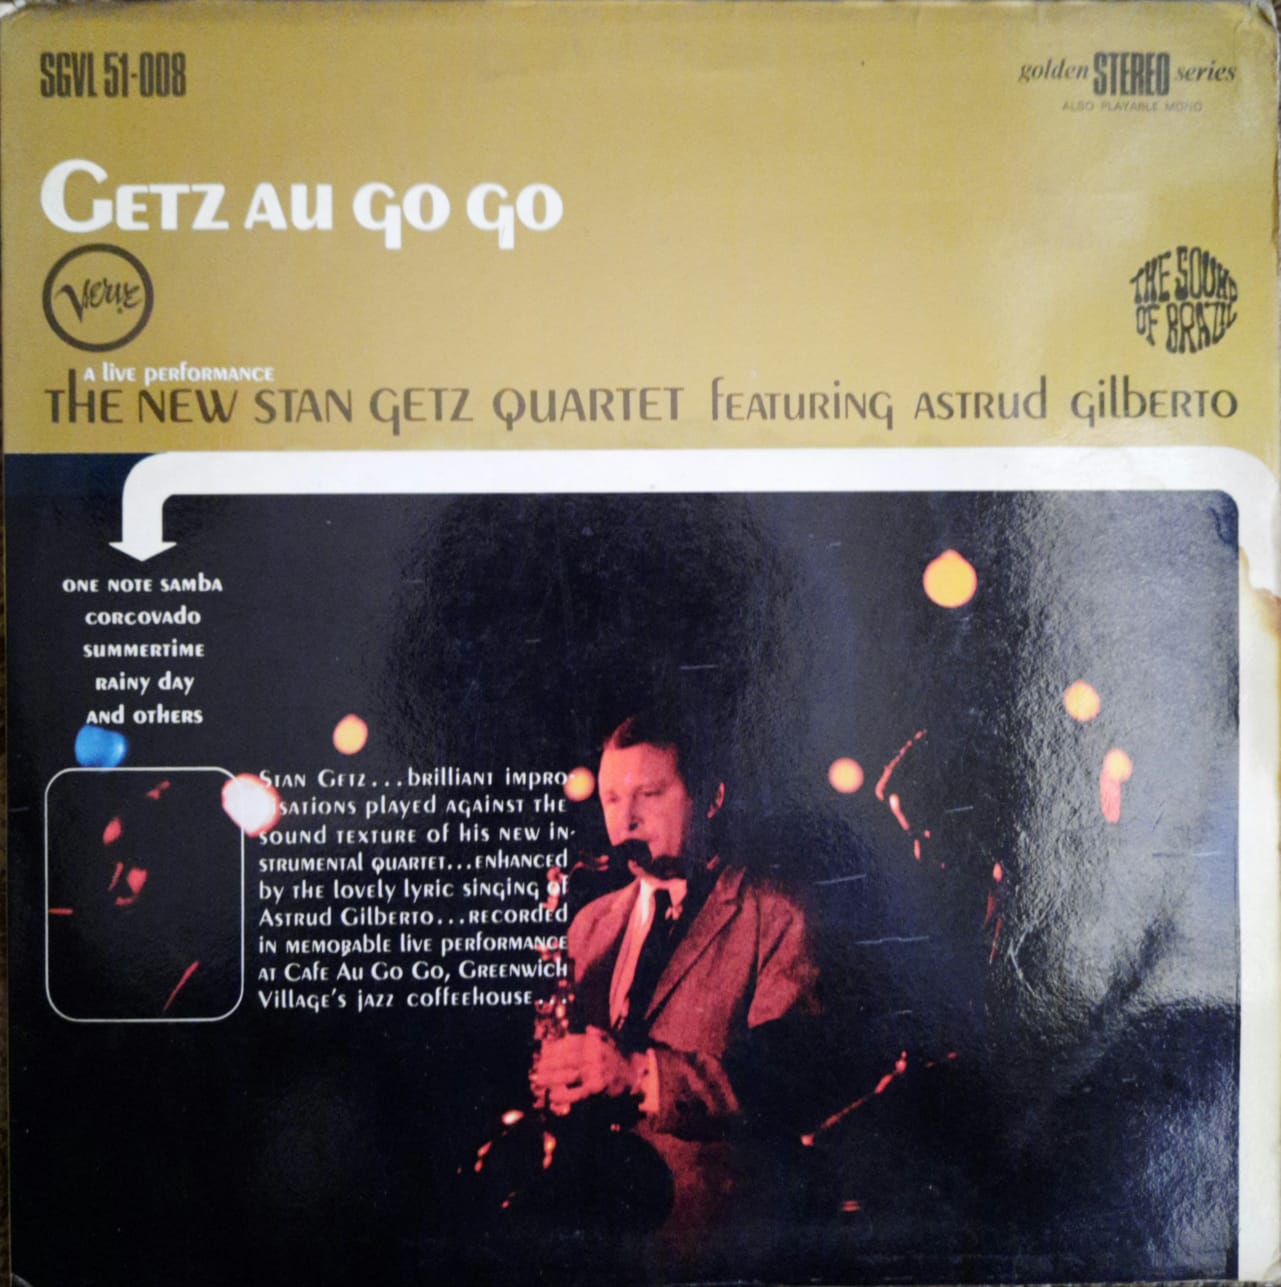 The New Stan Getz Quartet Featuring Astrud Gilberto - Getz Au Go Go (LP, Italia, 1968)